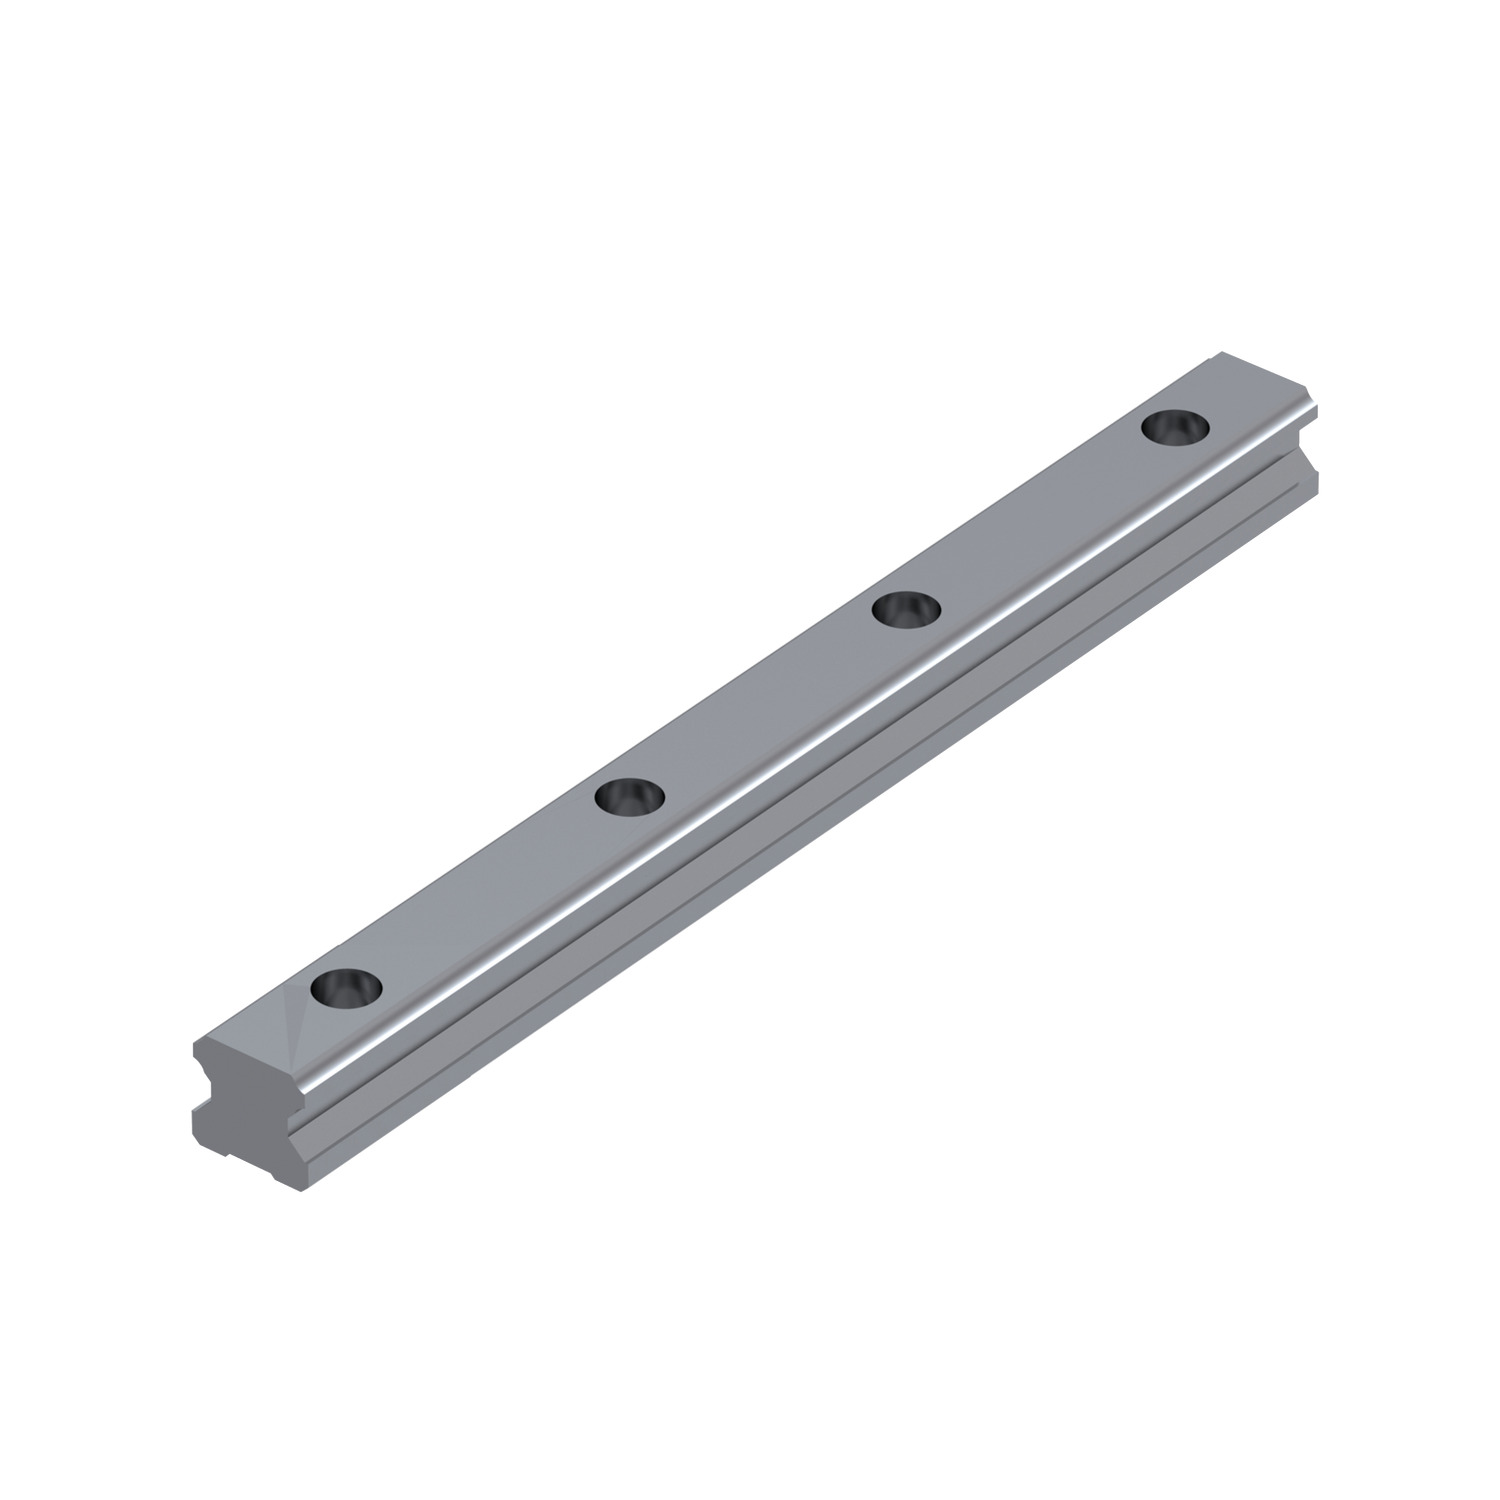 Product L1016.30, 30mm Linear Guide Rail standard / 